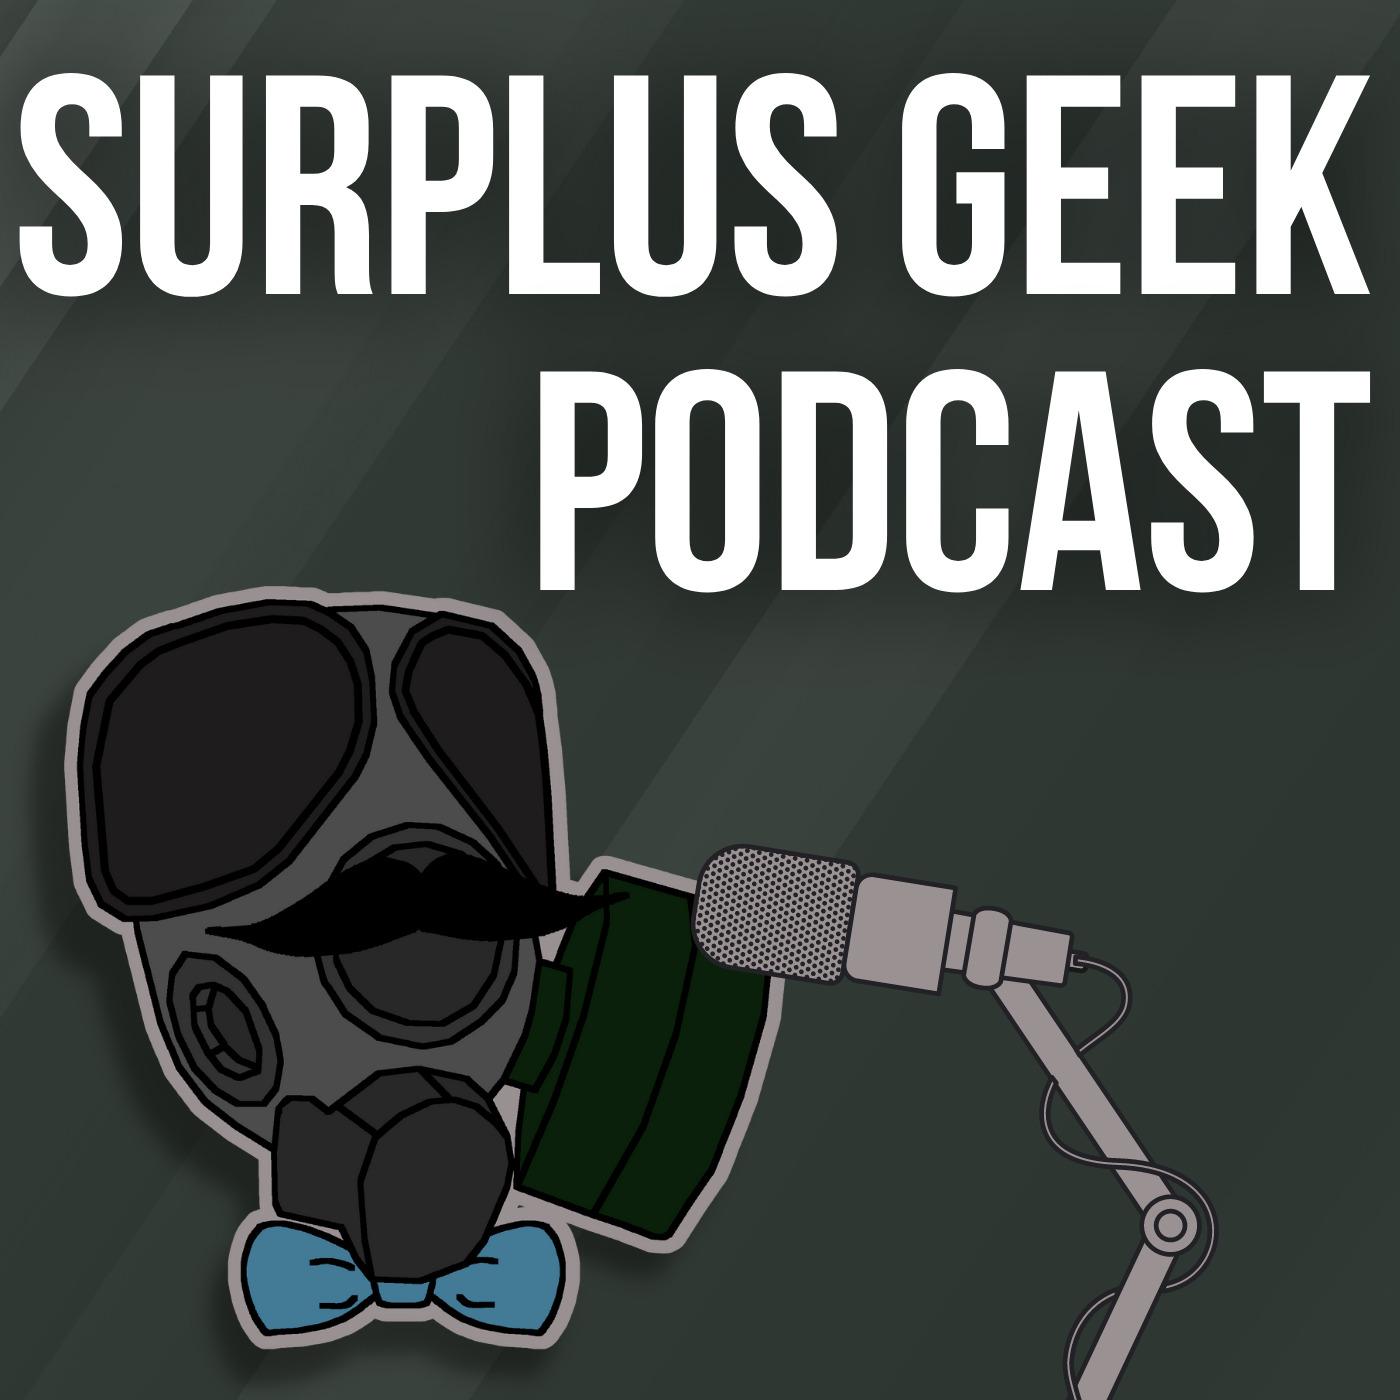 Surplus Geek Podcast